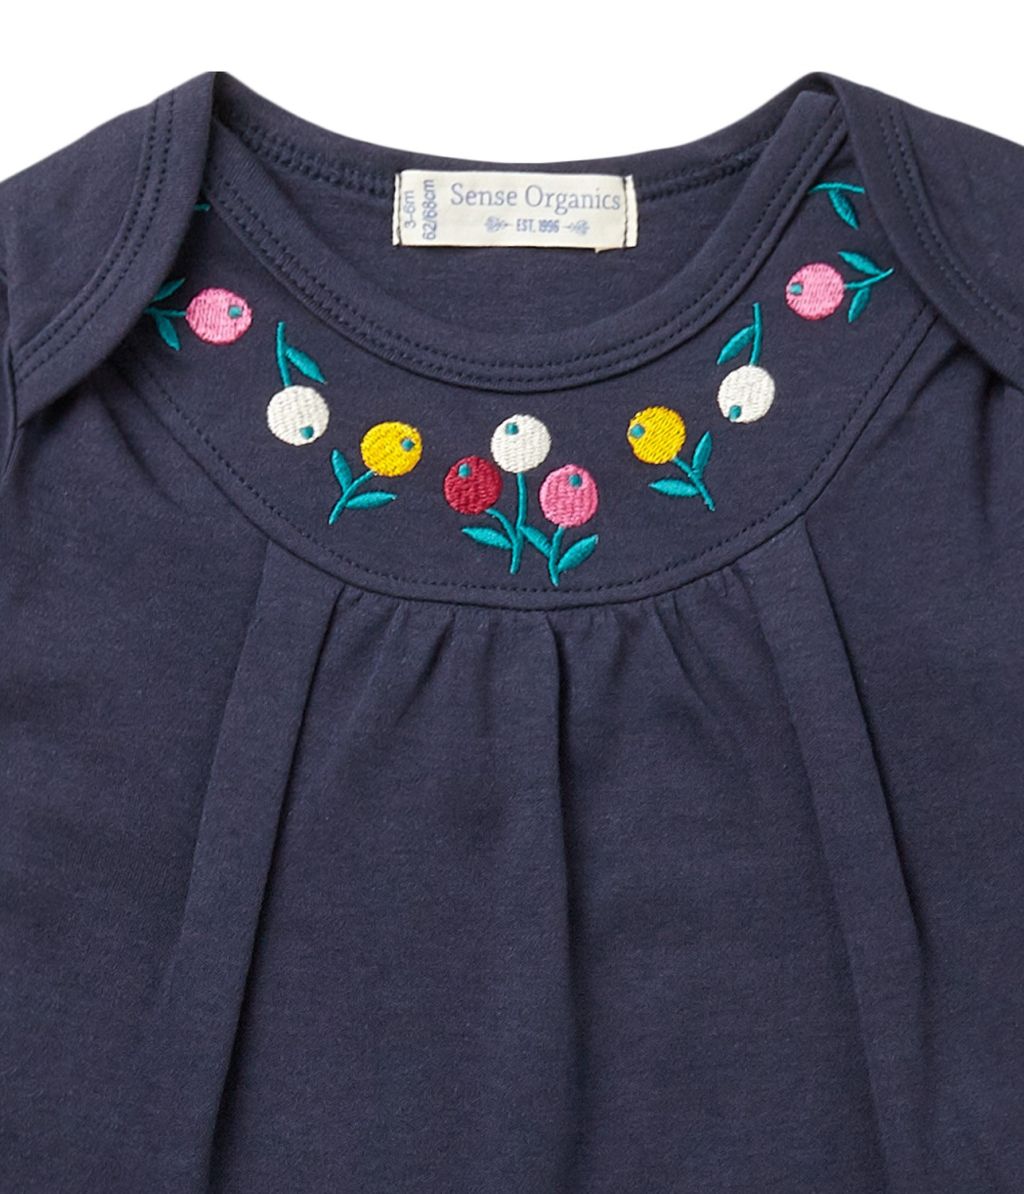 Luisa Baby Shirt Longsleeve Navy+Flower Embroidery 92